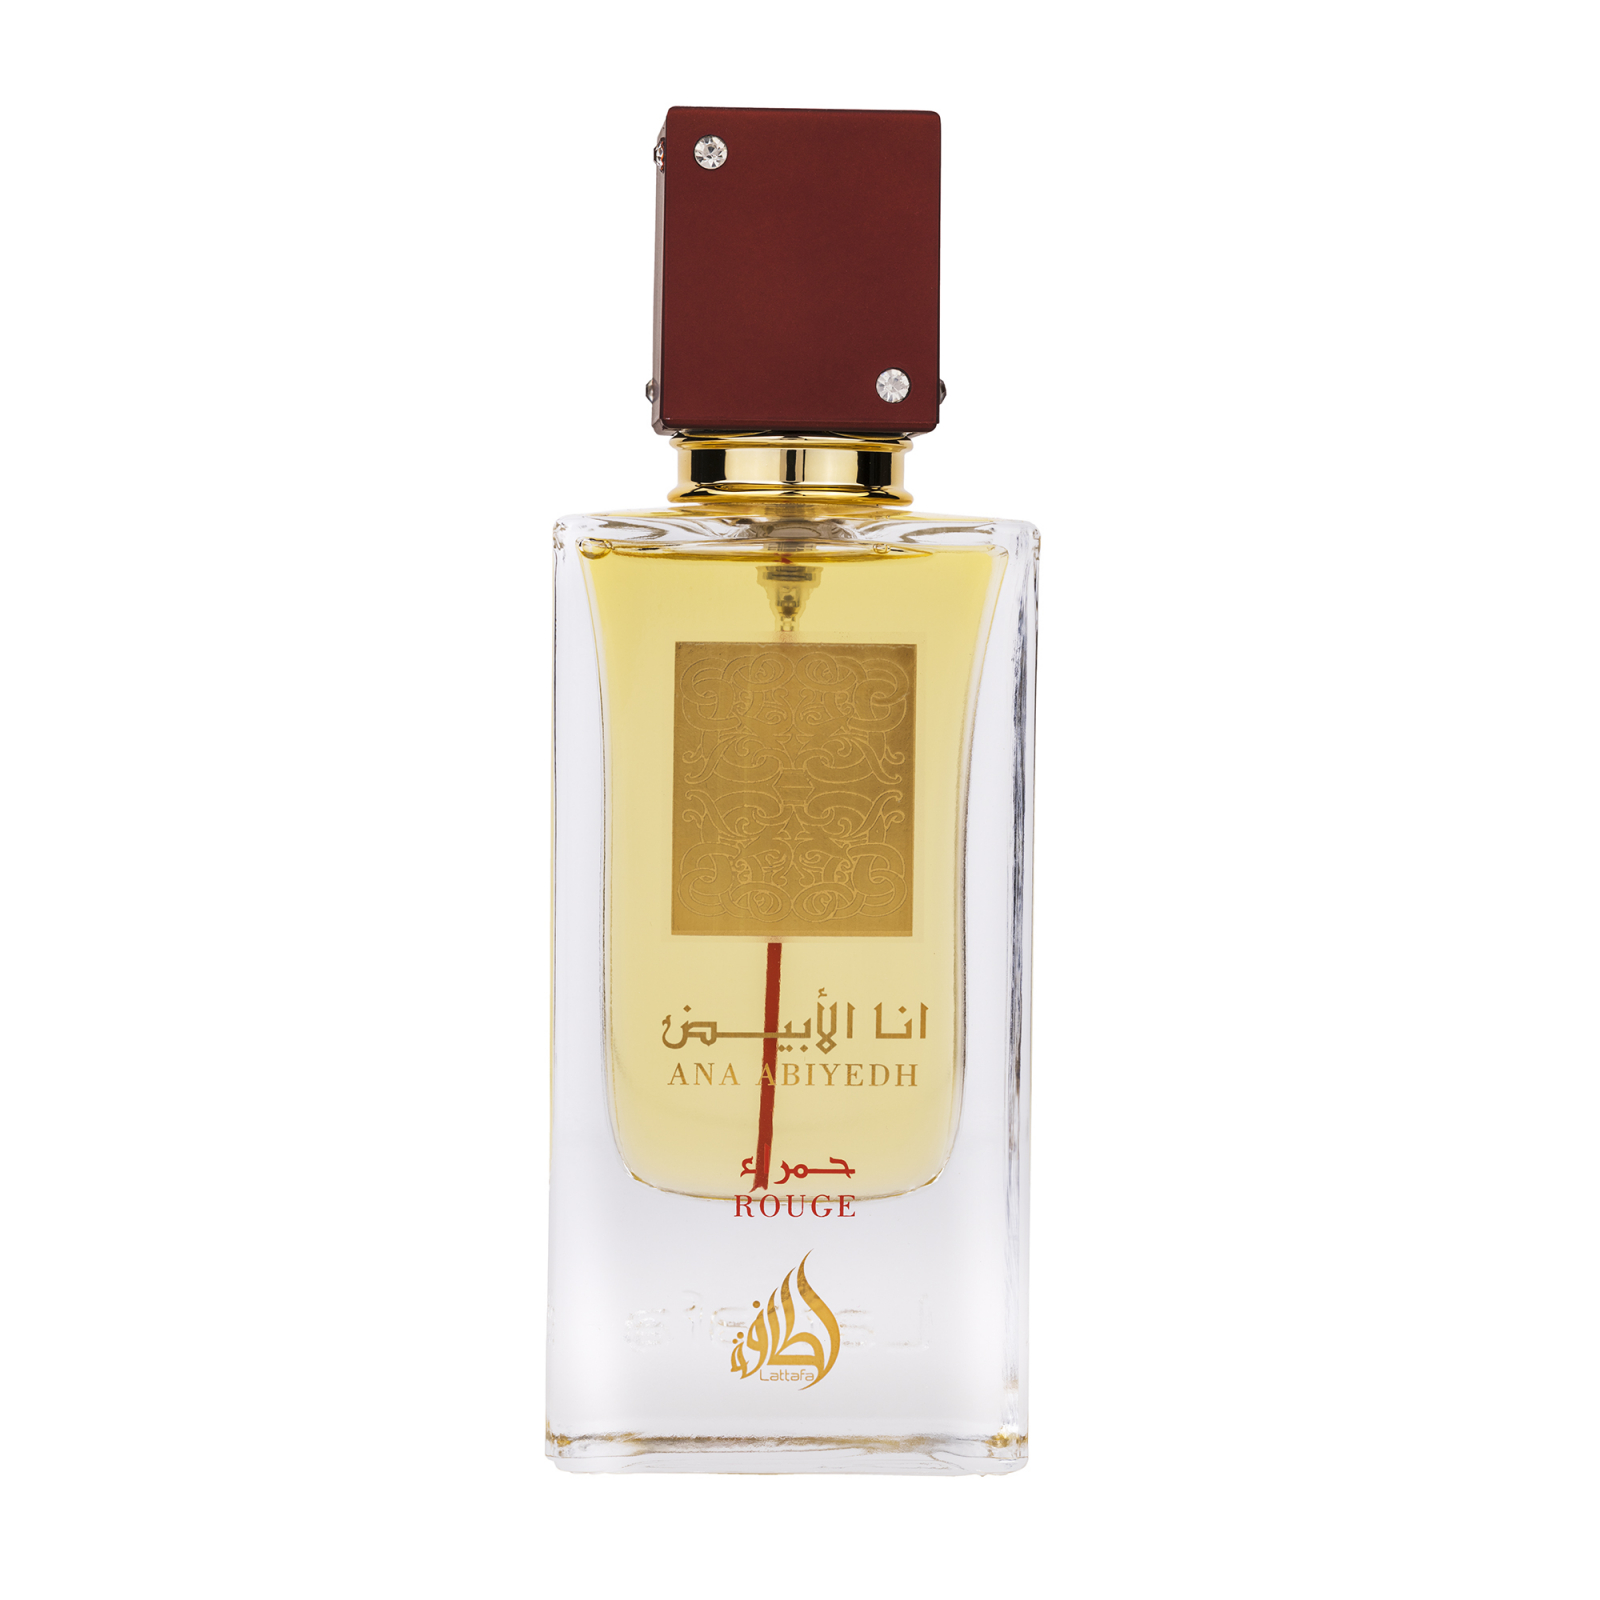 Parfum Ana Abiyedh Rouge, apa de parfum 60 ml, femei - inspirat ...